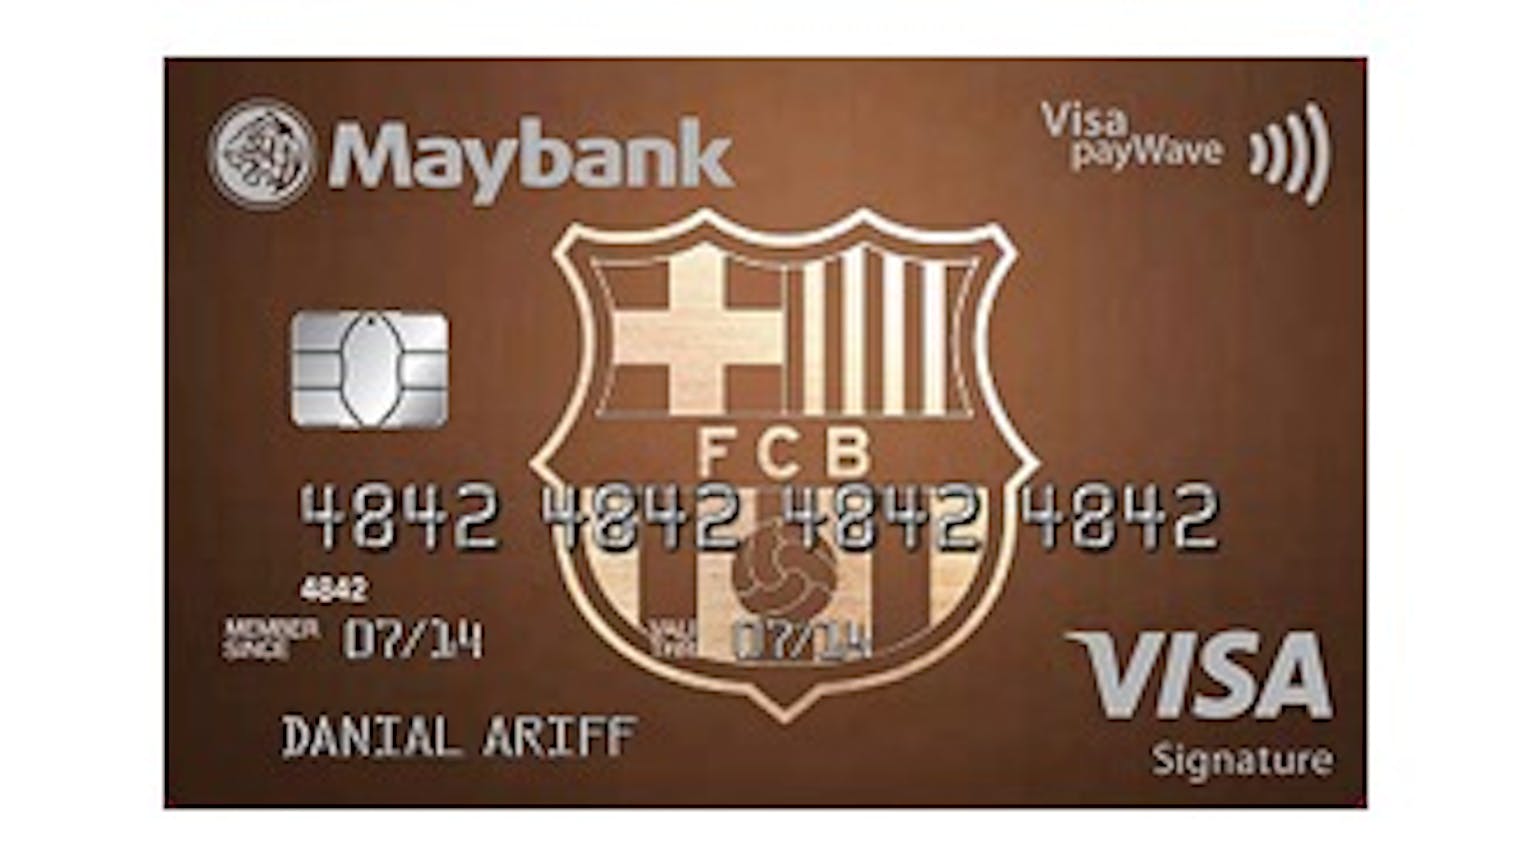 Maybank FC Barcelona VISA Signature Card